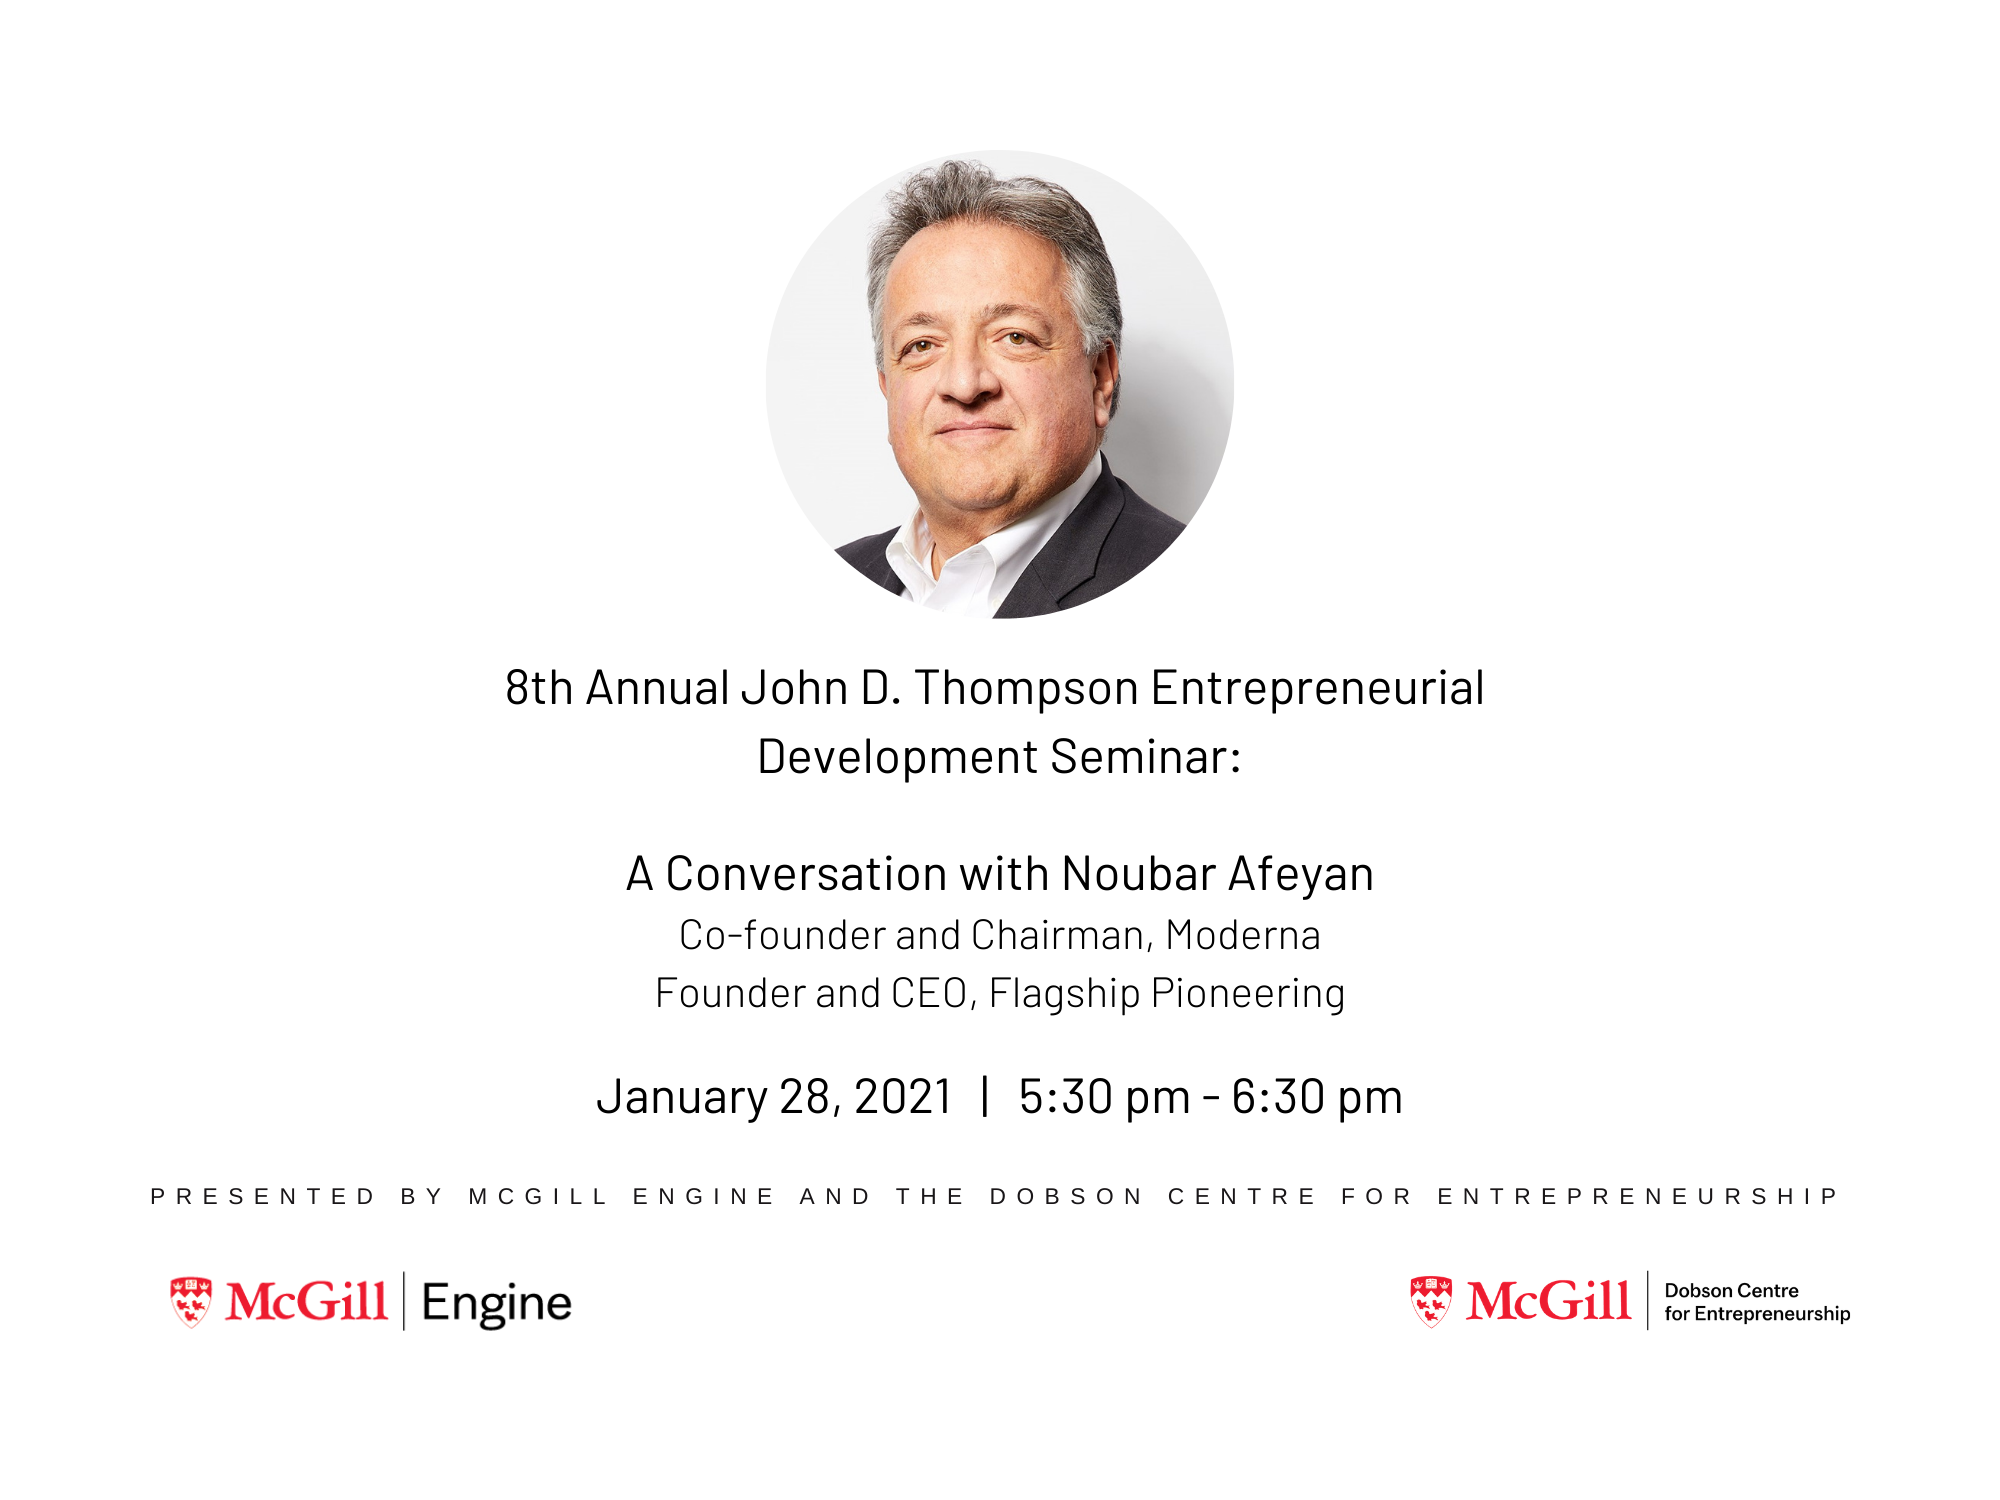 8th Annual John D. Thompson Entrepreneurial Development Seminar